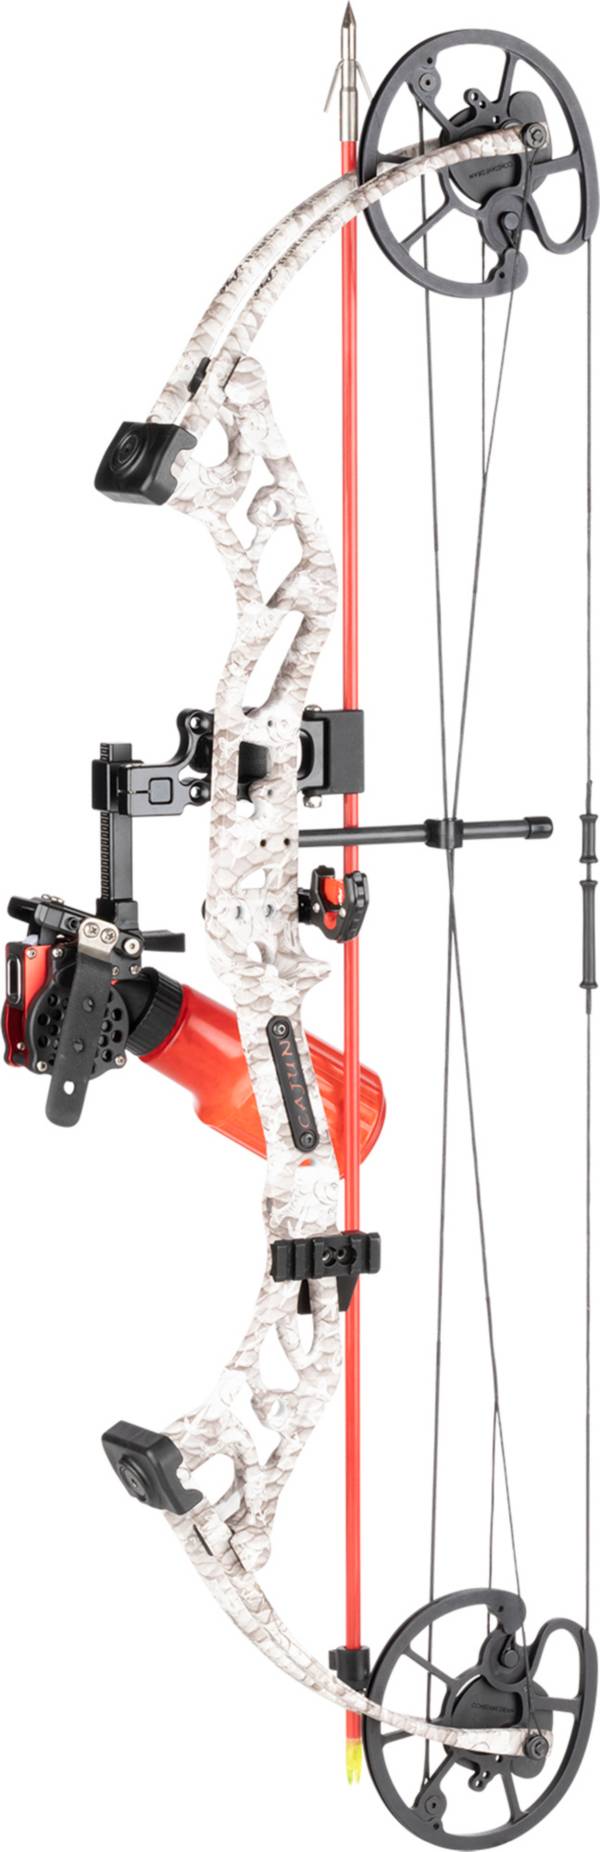 Cajon Sucker Punch Pro RTF Bowfishing Bow product image